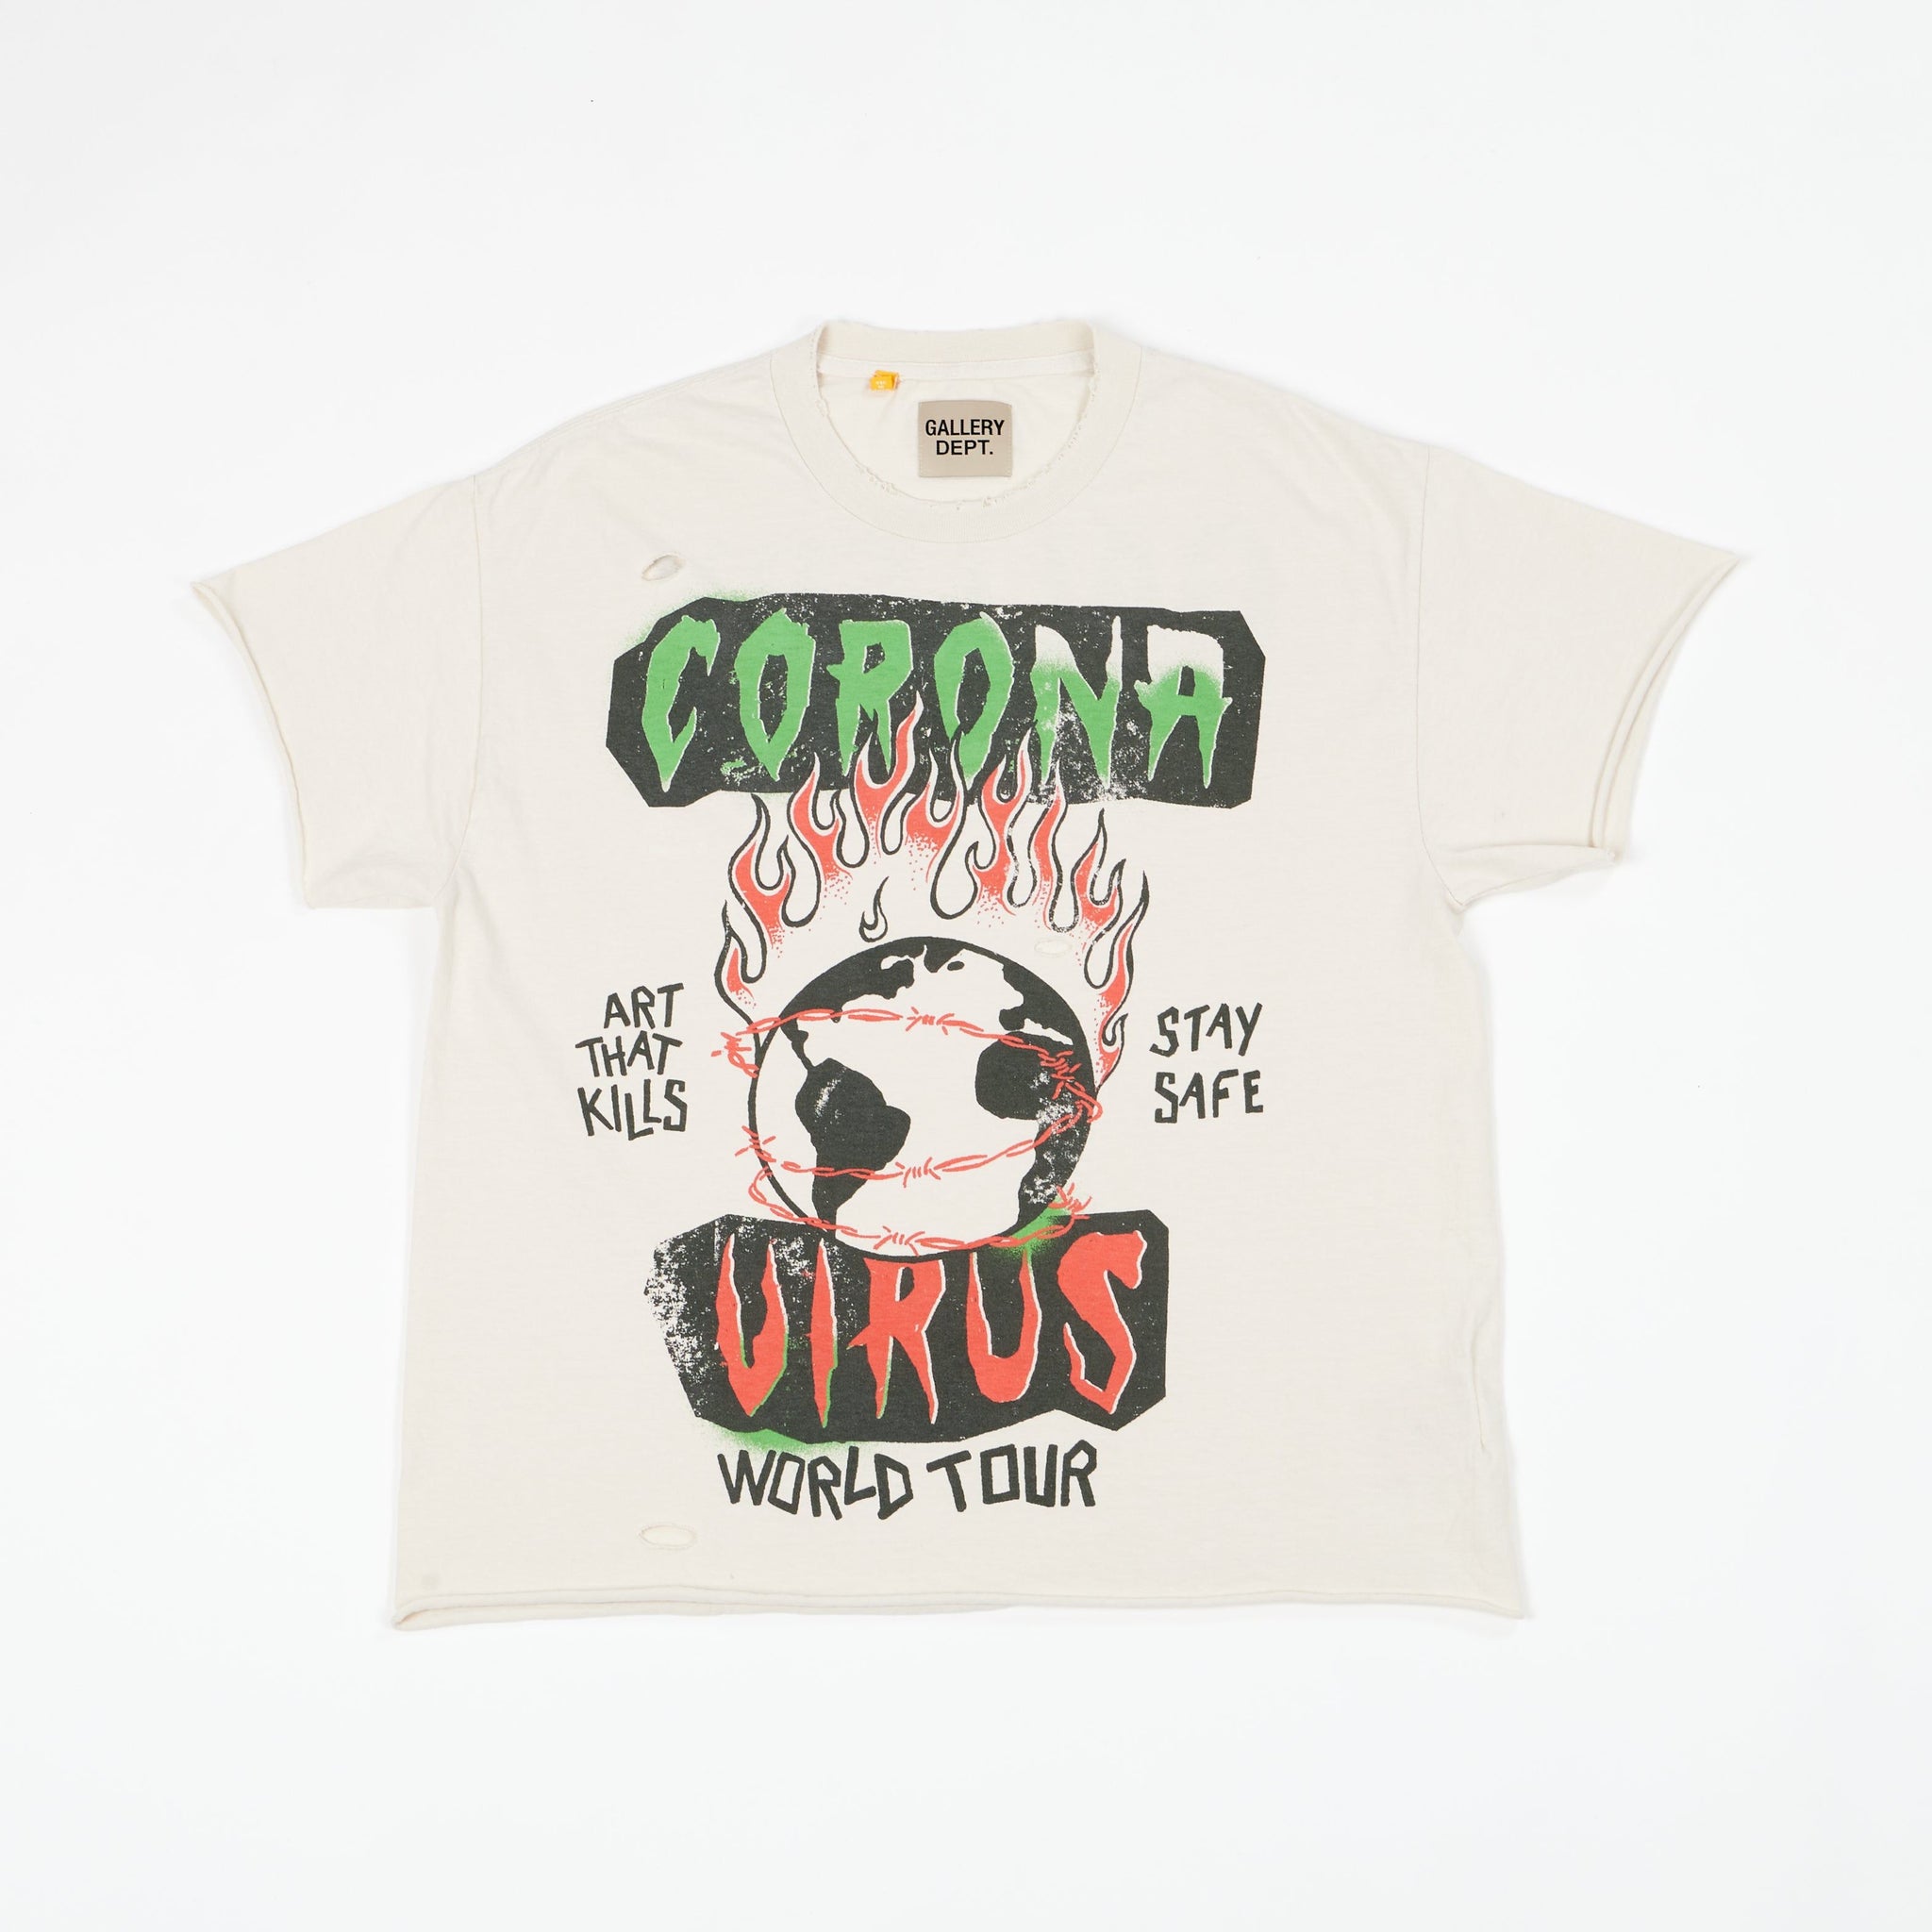 T-shirt Corona Tour - Lesthete Gallery dept